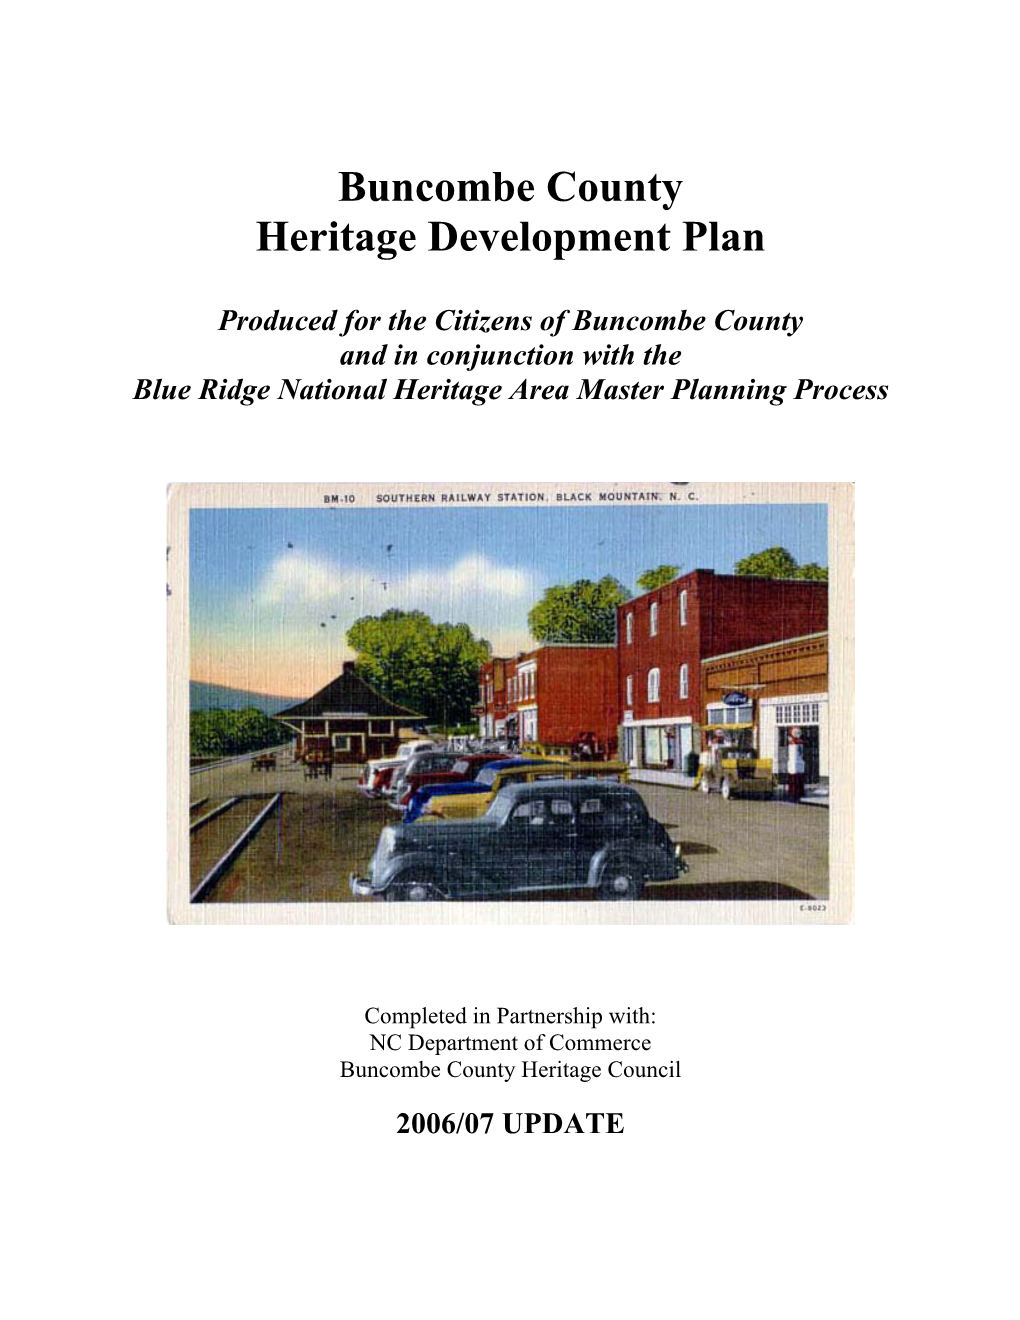 Buncombe County Heritage Development Plan